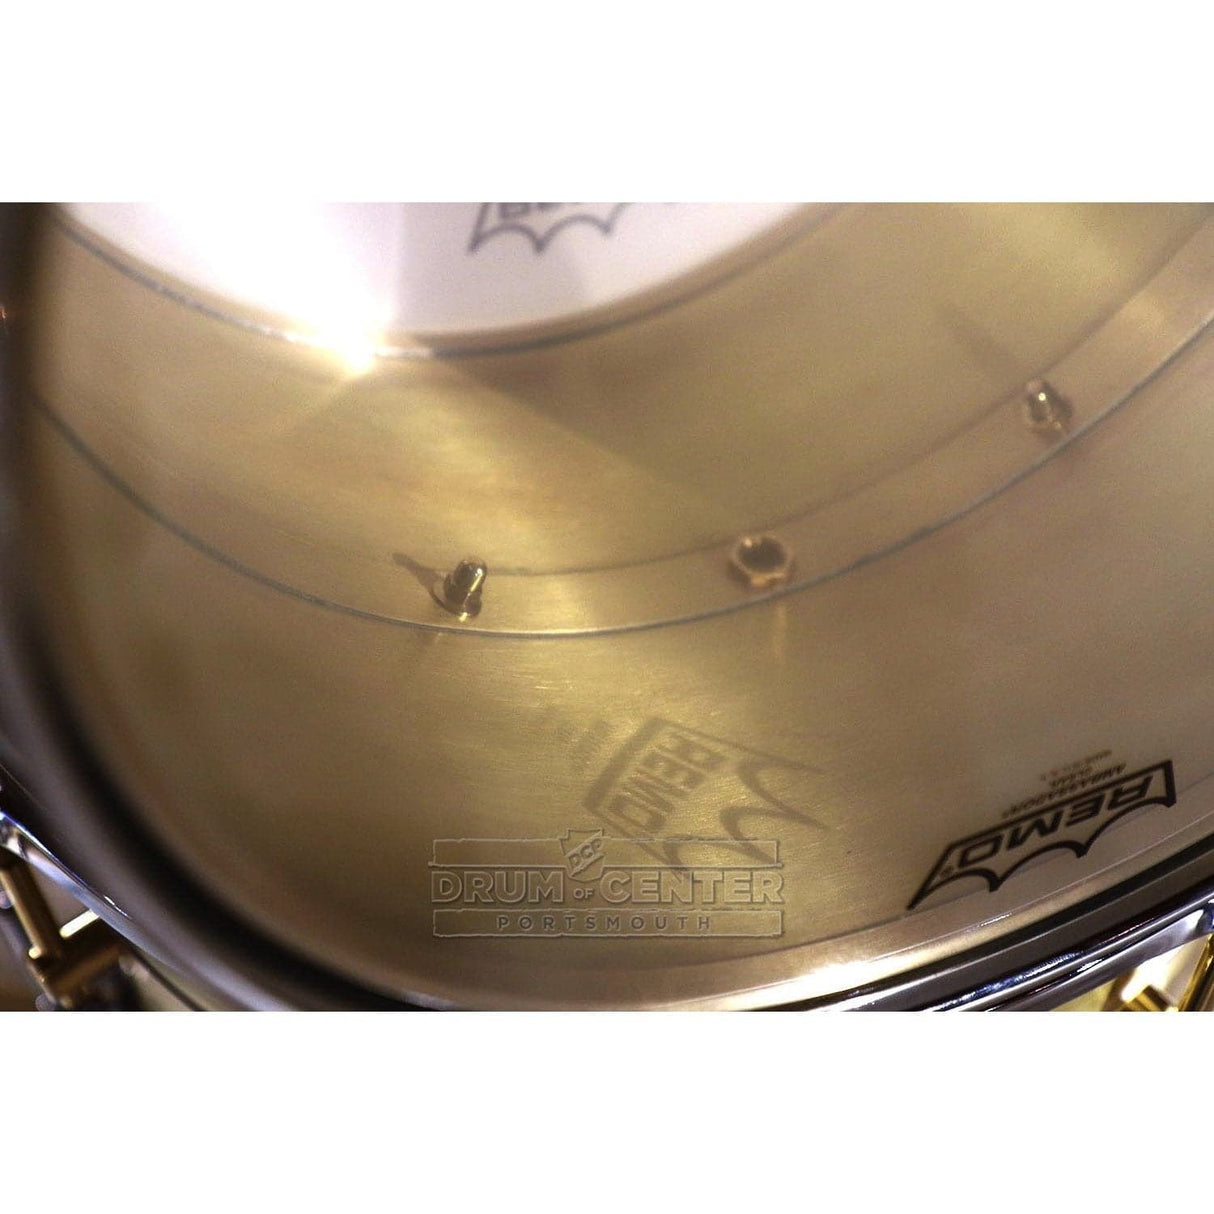 Schagerl Drum Set Brass Series Rock Kit 3pc